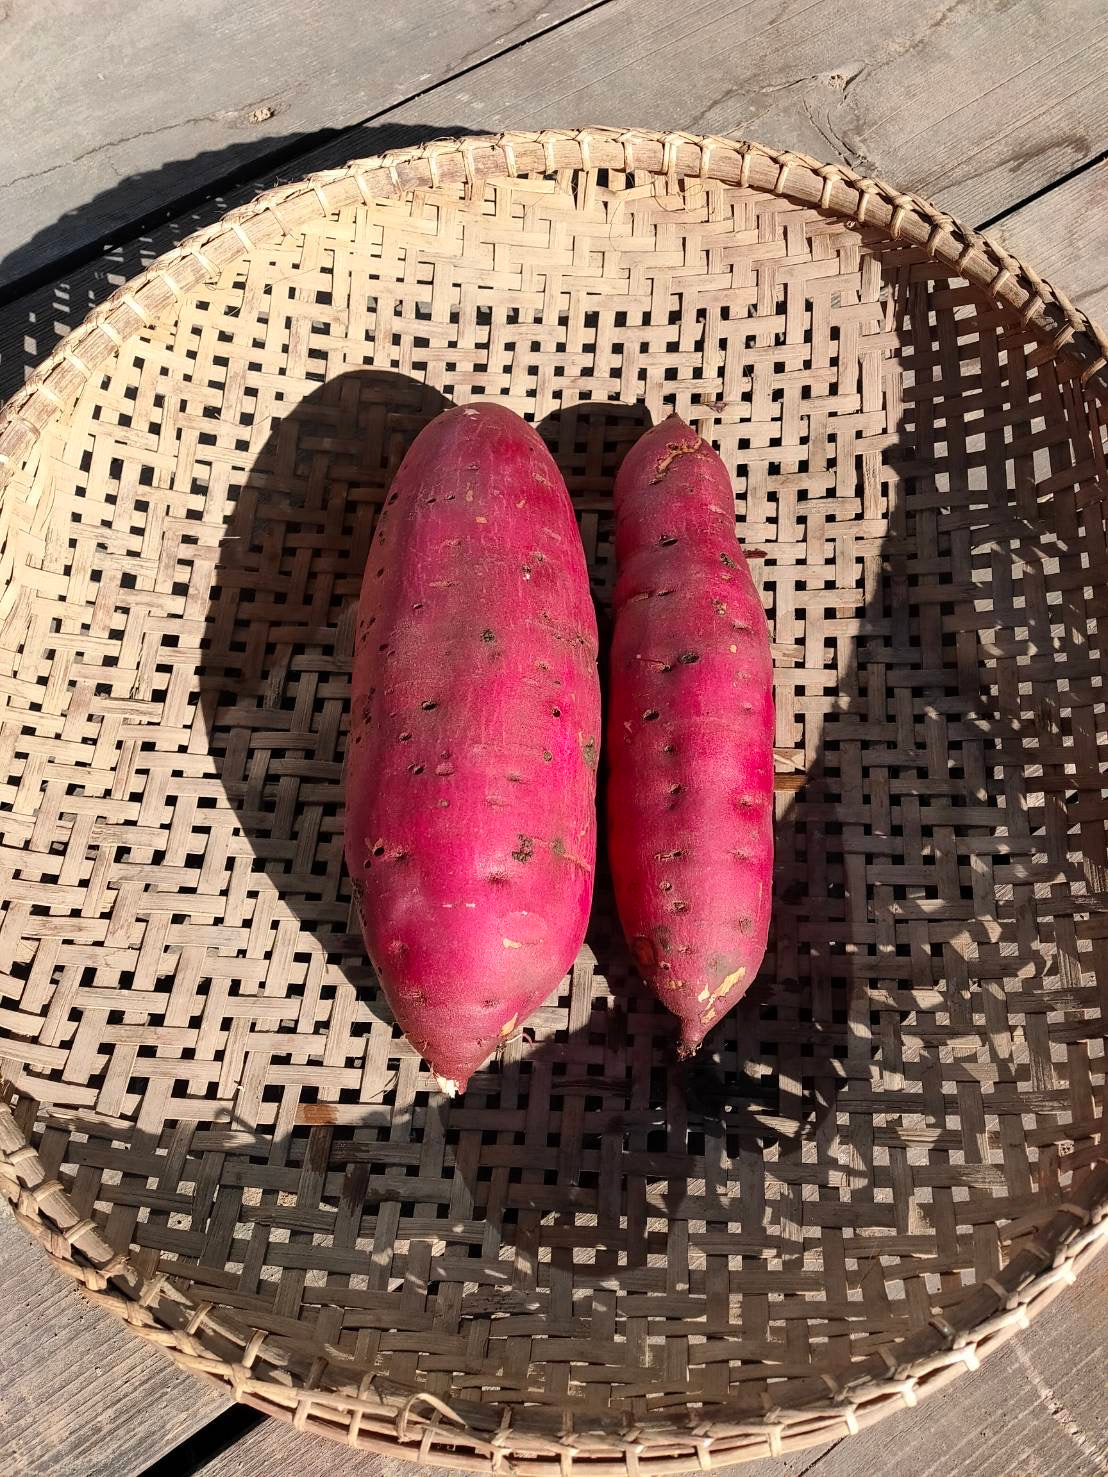 sweet potatoes, kg (Beniharuka)